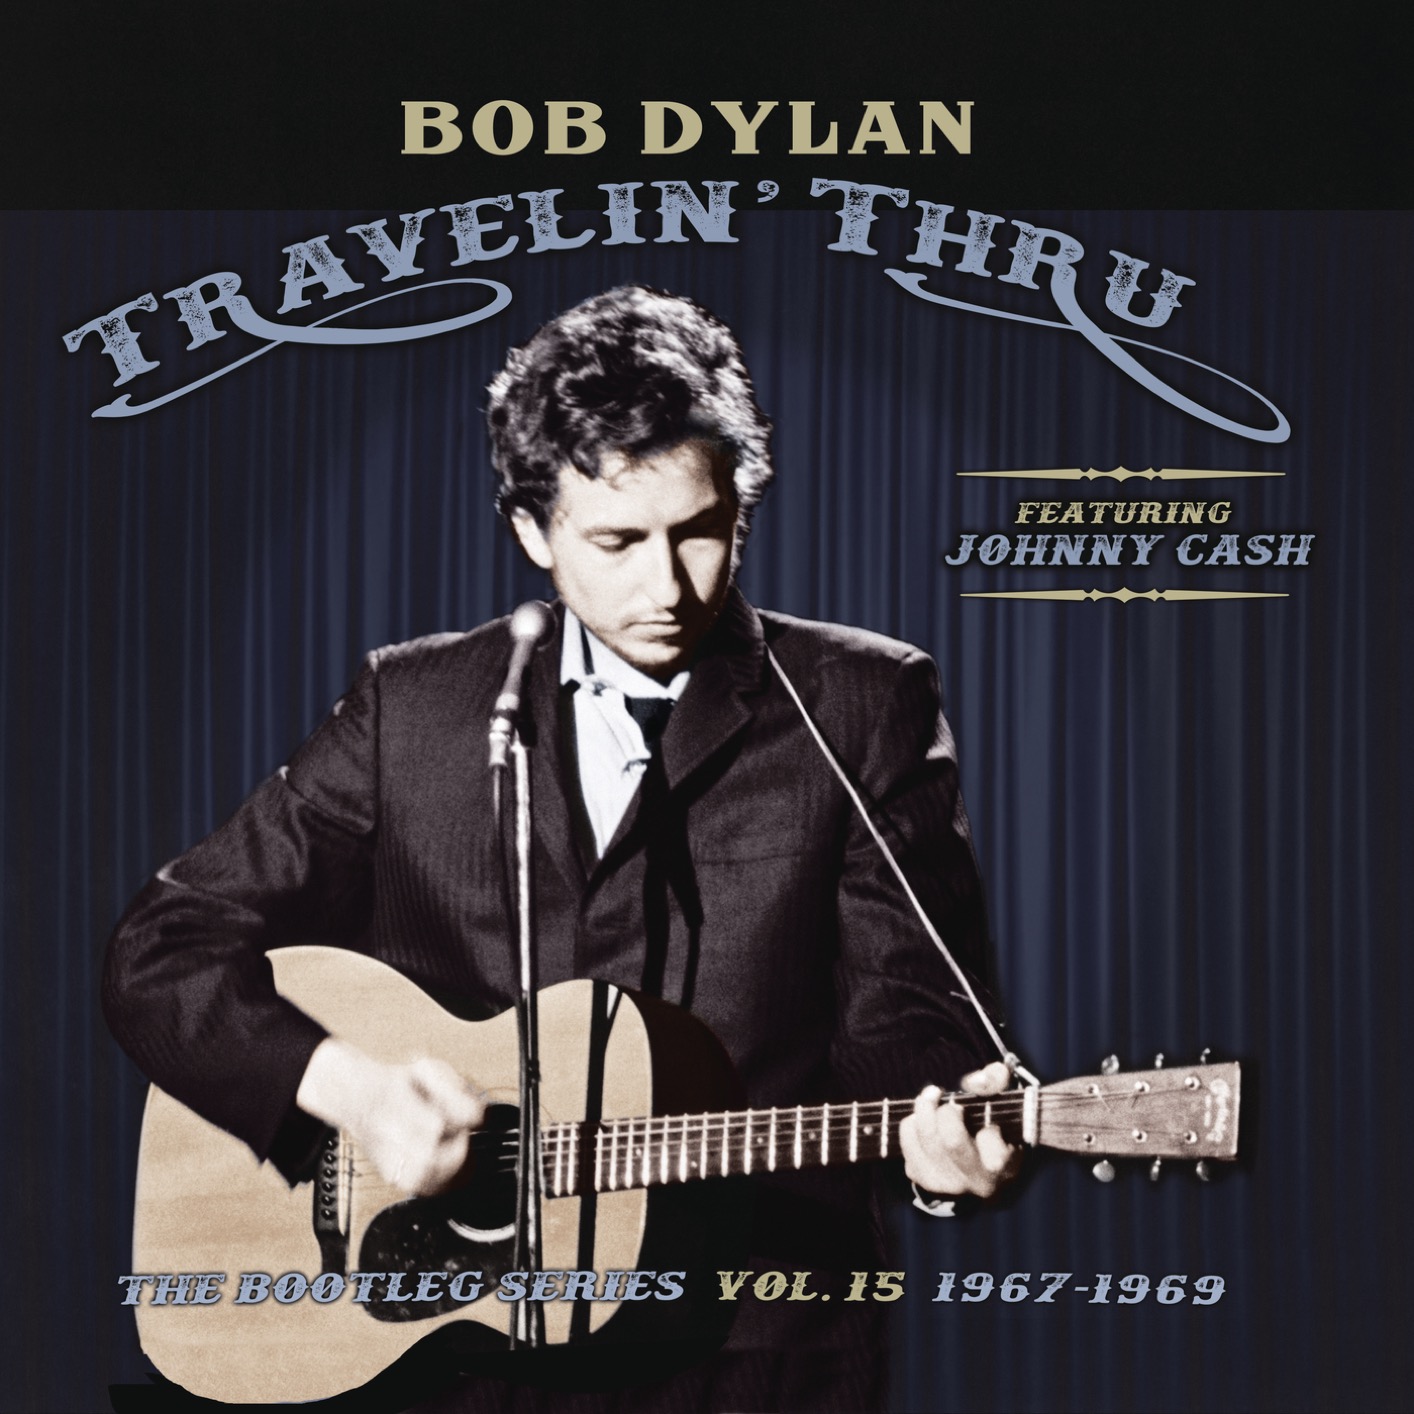 Bob Dylan - Travelin’ Thru, 1967 - 1969: The Bootleg Series, Vol. 15 (Remastered) (2019) [FLAC 24bit/96kHz]